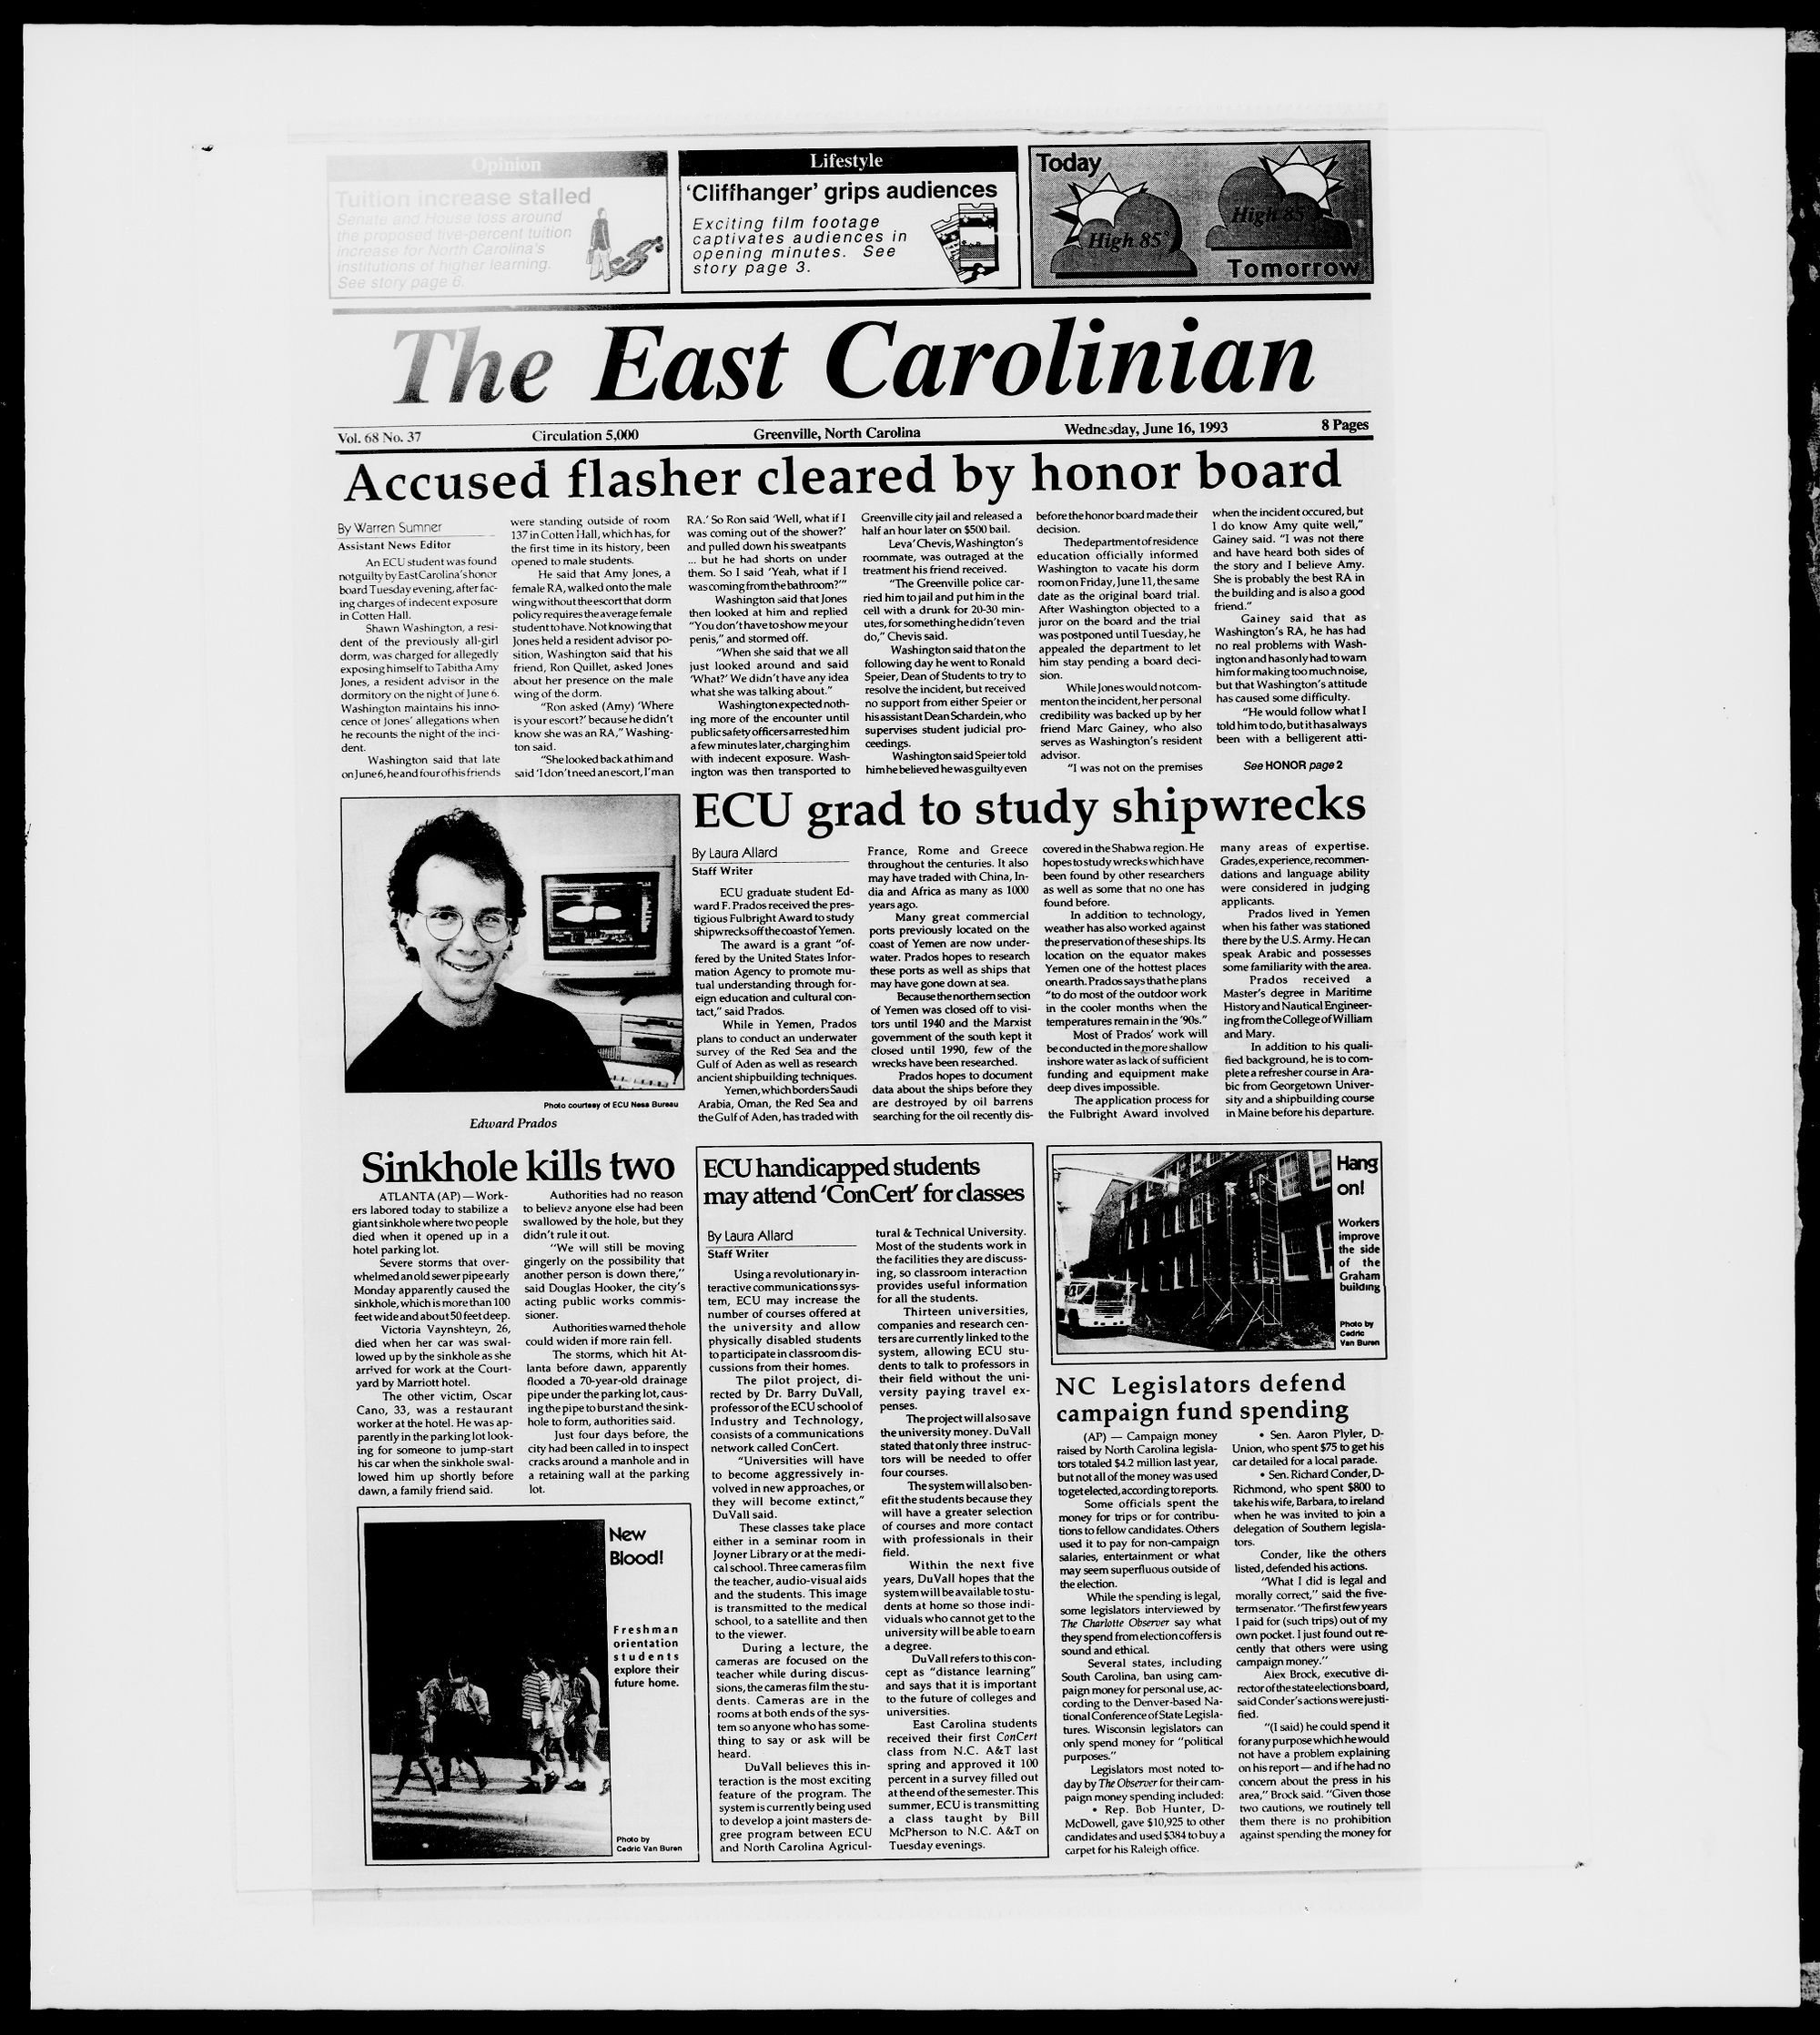 The East Carolinian, June 16, 1993 photo